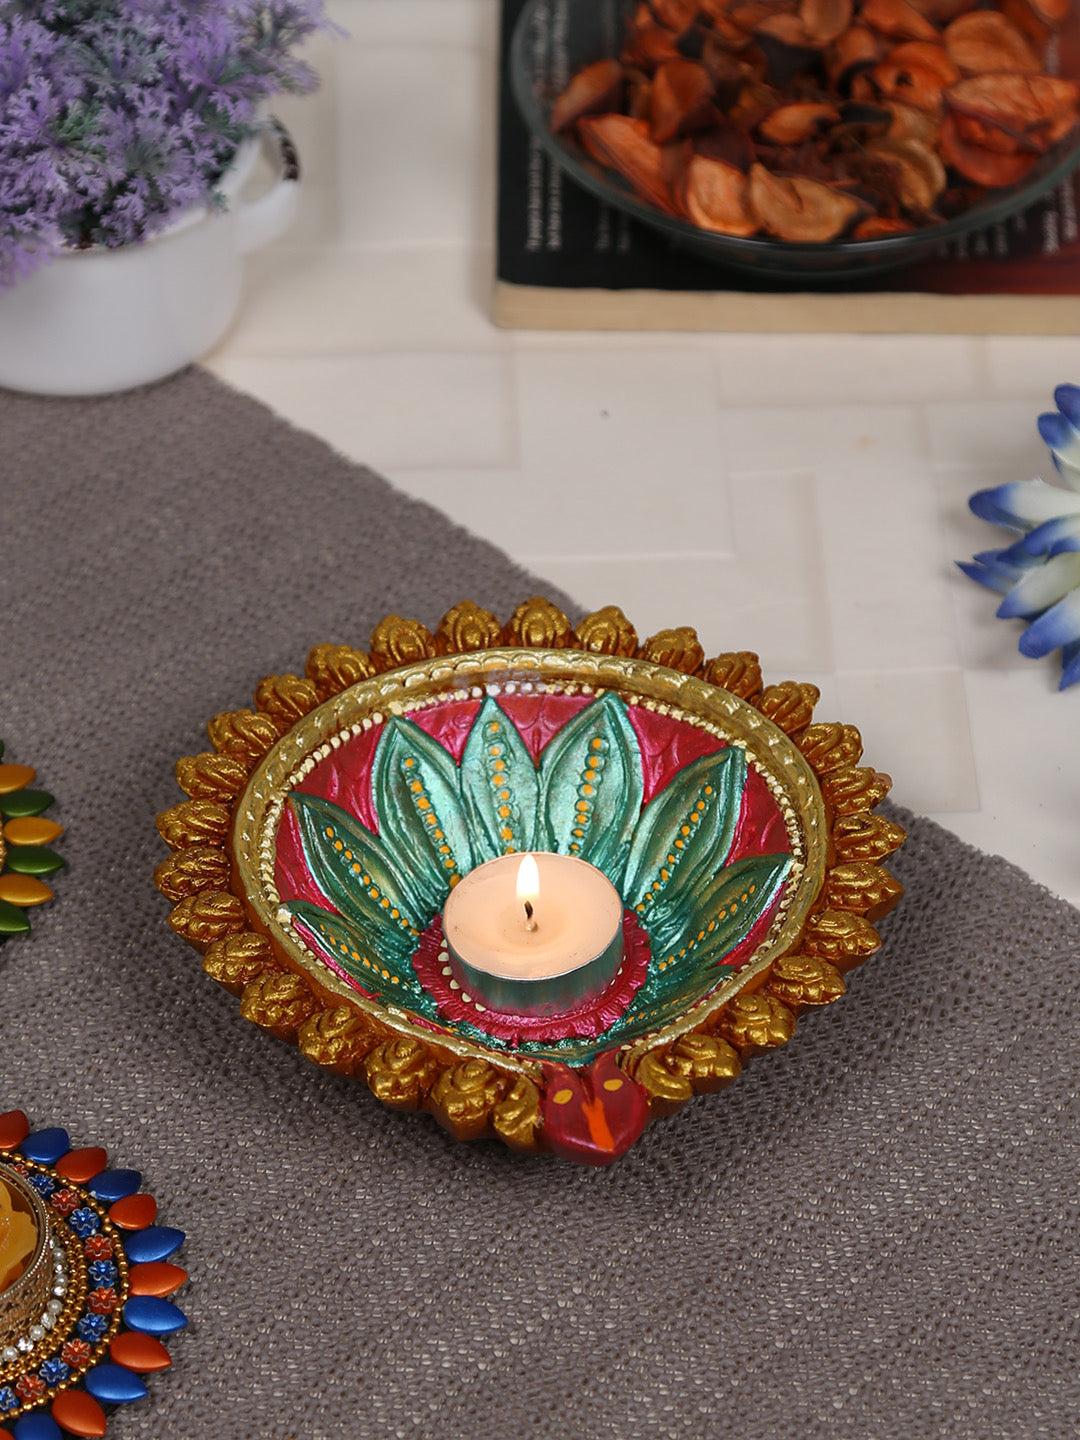 Aapno Rajasthan Floral design Multicolor Terracotta Handcrafted Diya for Diwali - 1 pc - Default Title (DD1824)